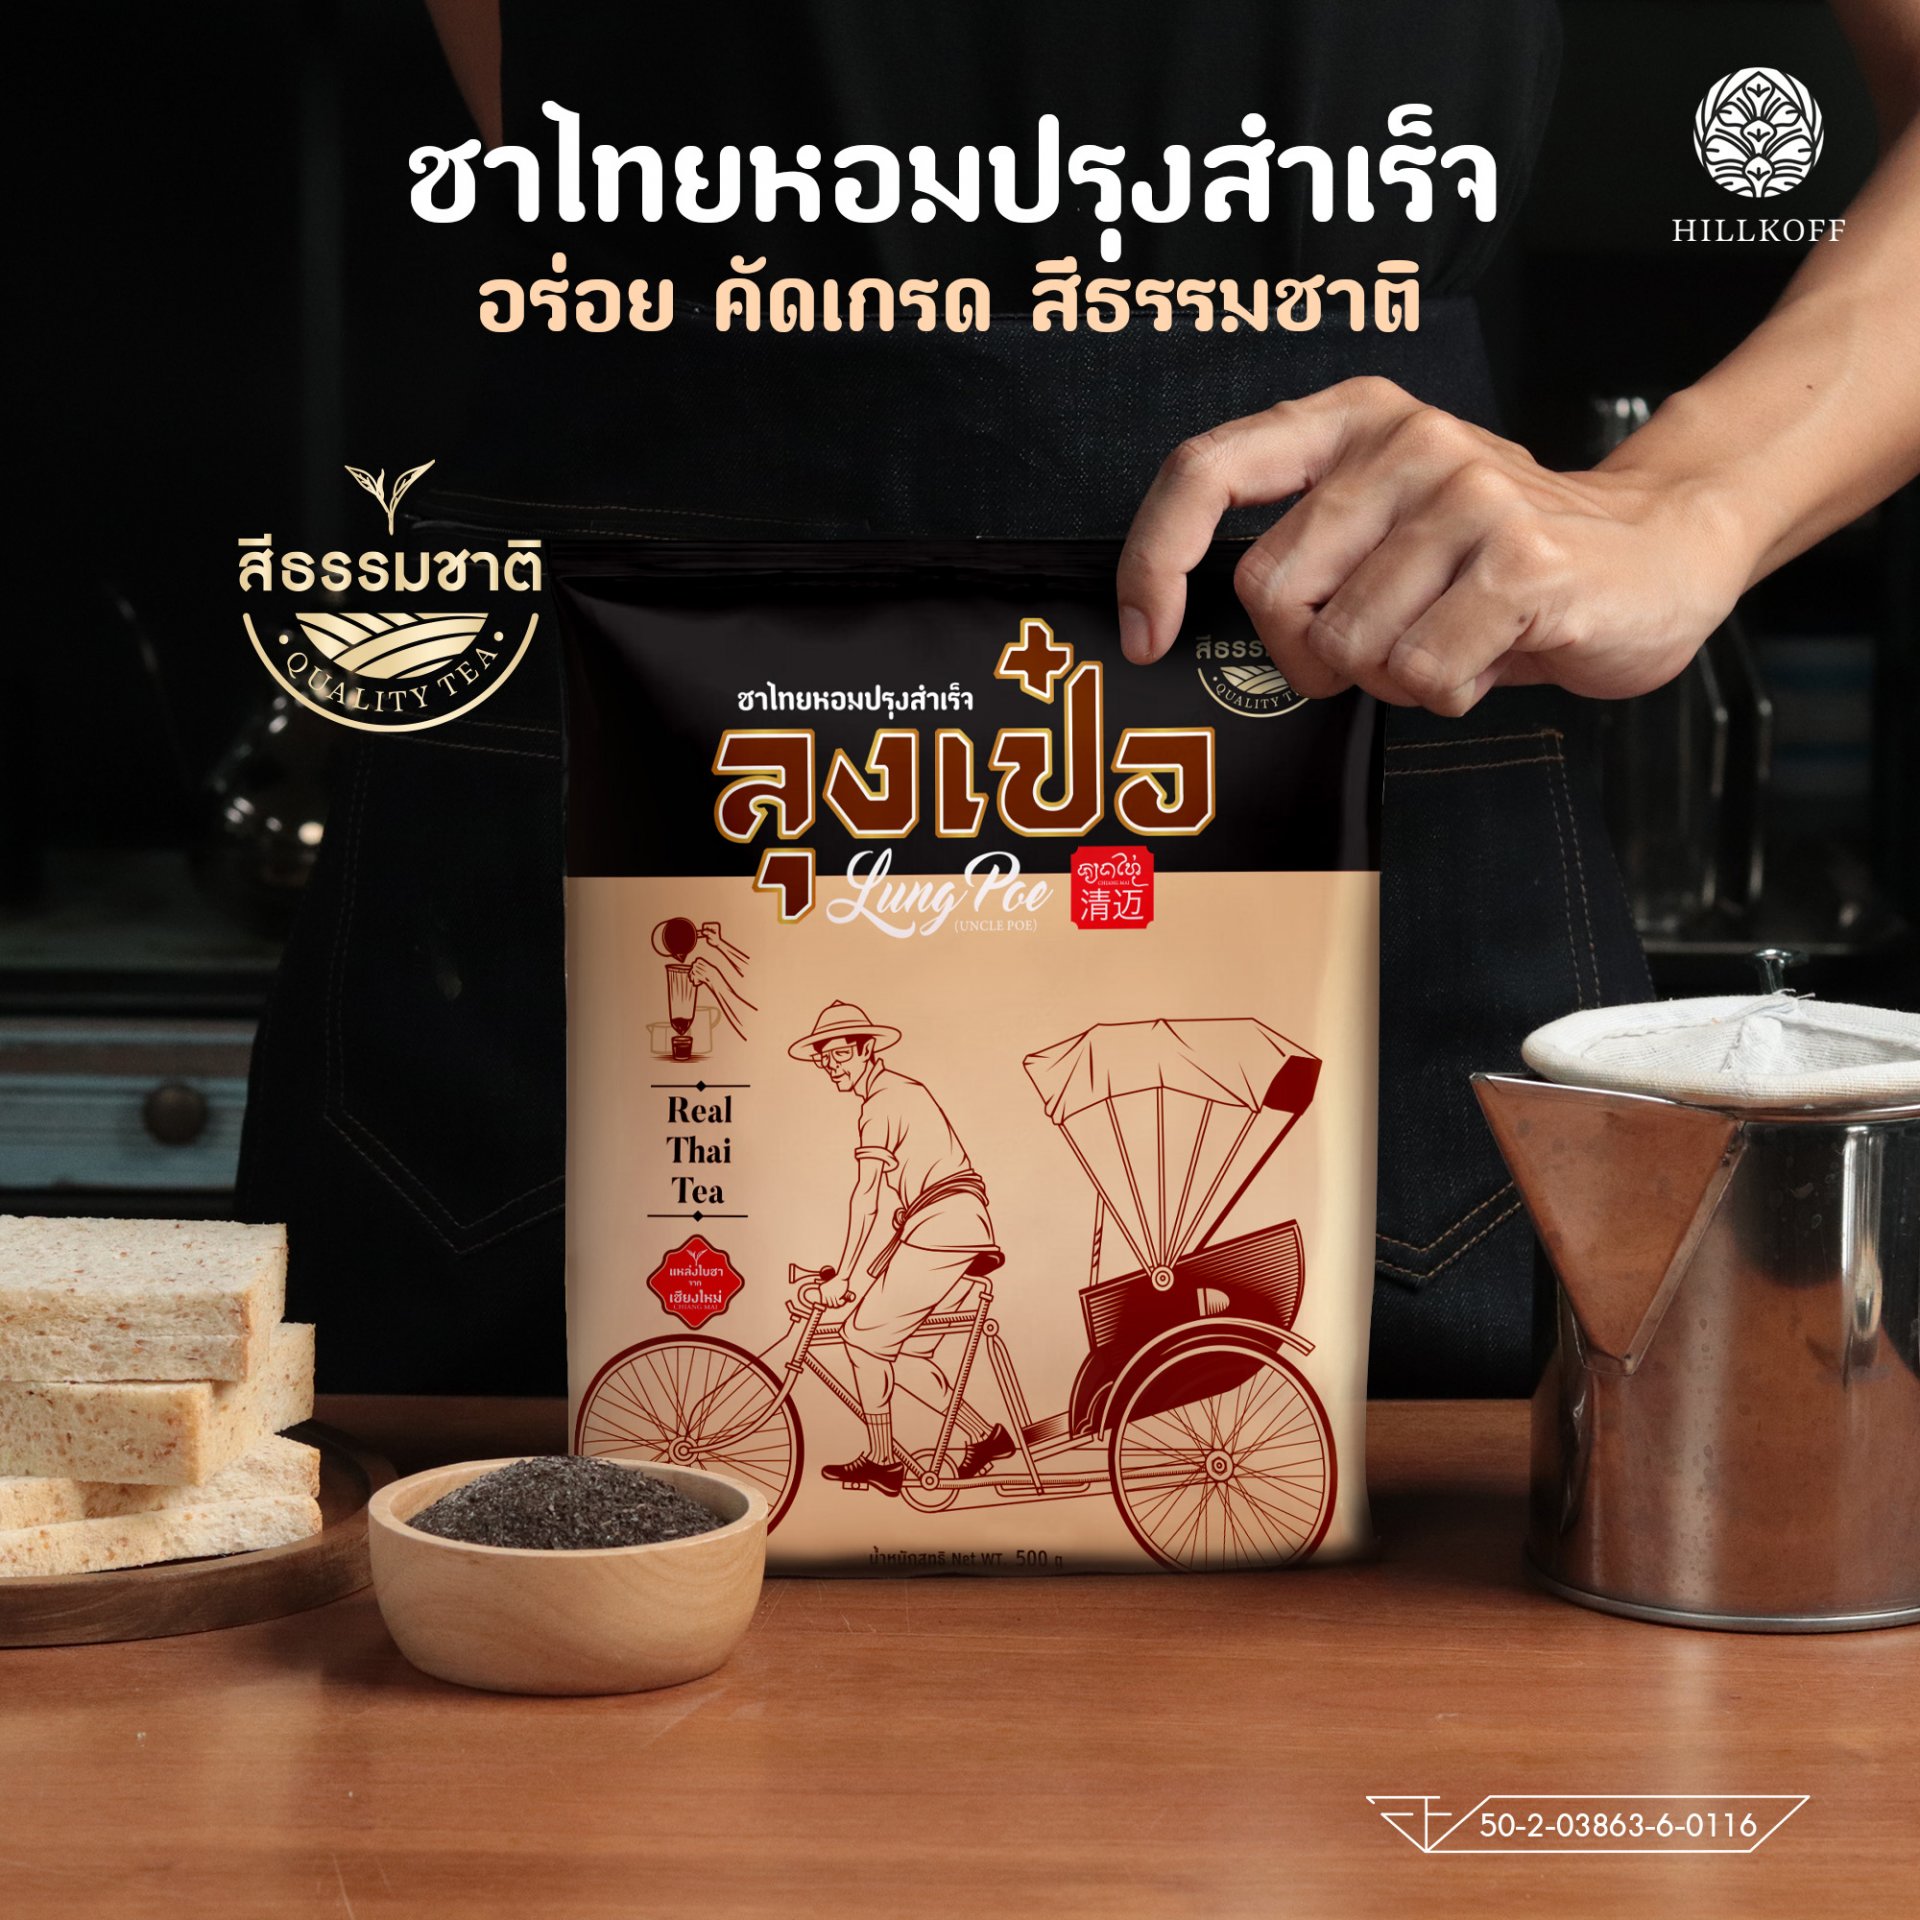 Hillkoff : ชาไทย สูตรพรีเมี่ยม ไม่แต่งสี ไม่แต่งกลิ่น ตราลุงเป๋อ Real Thai Tea ขนาด 500 กรัม